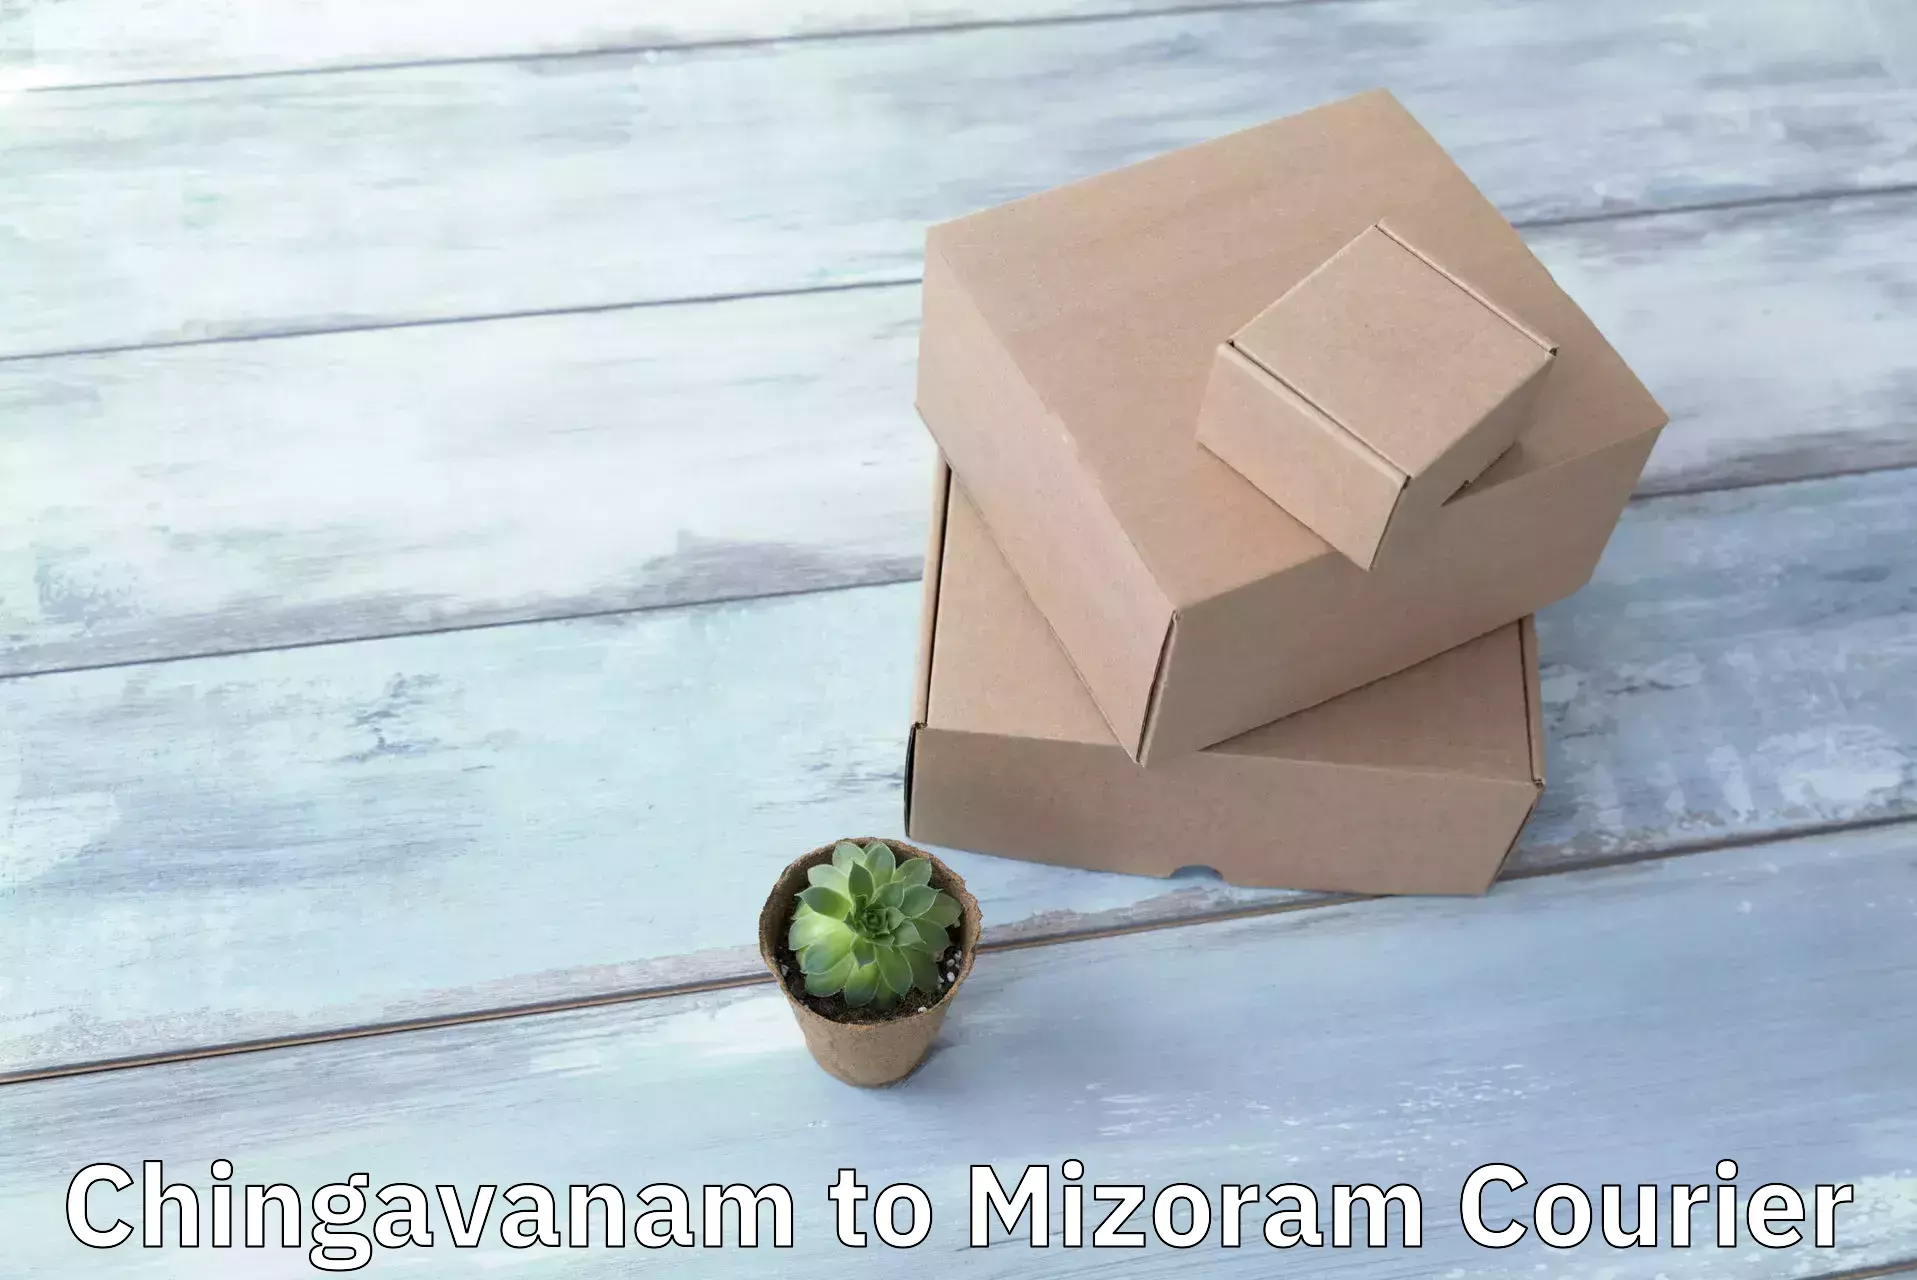 Courier service innovation Chingavanam to Mizoram